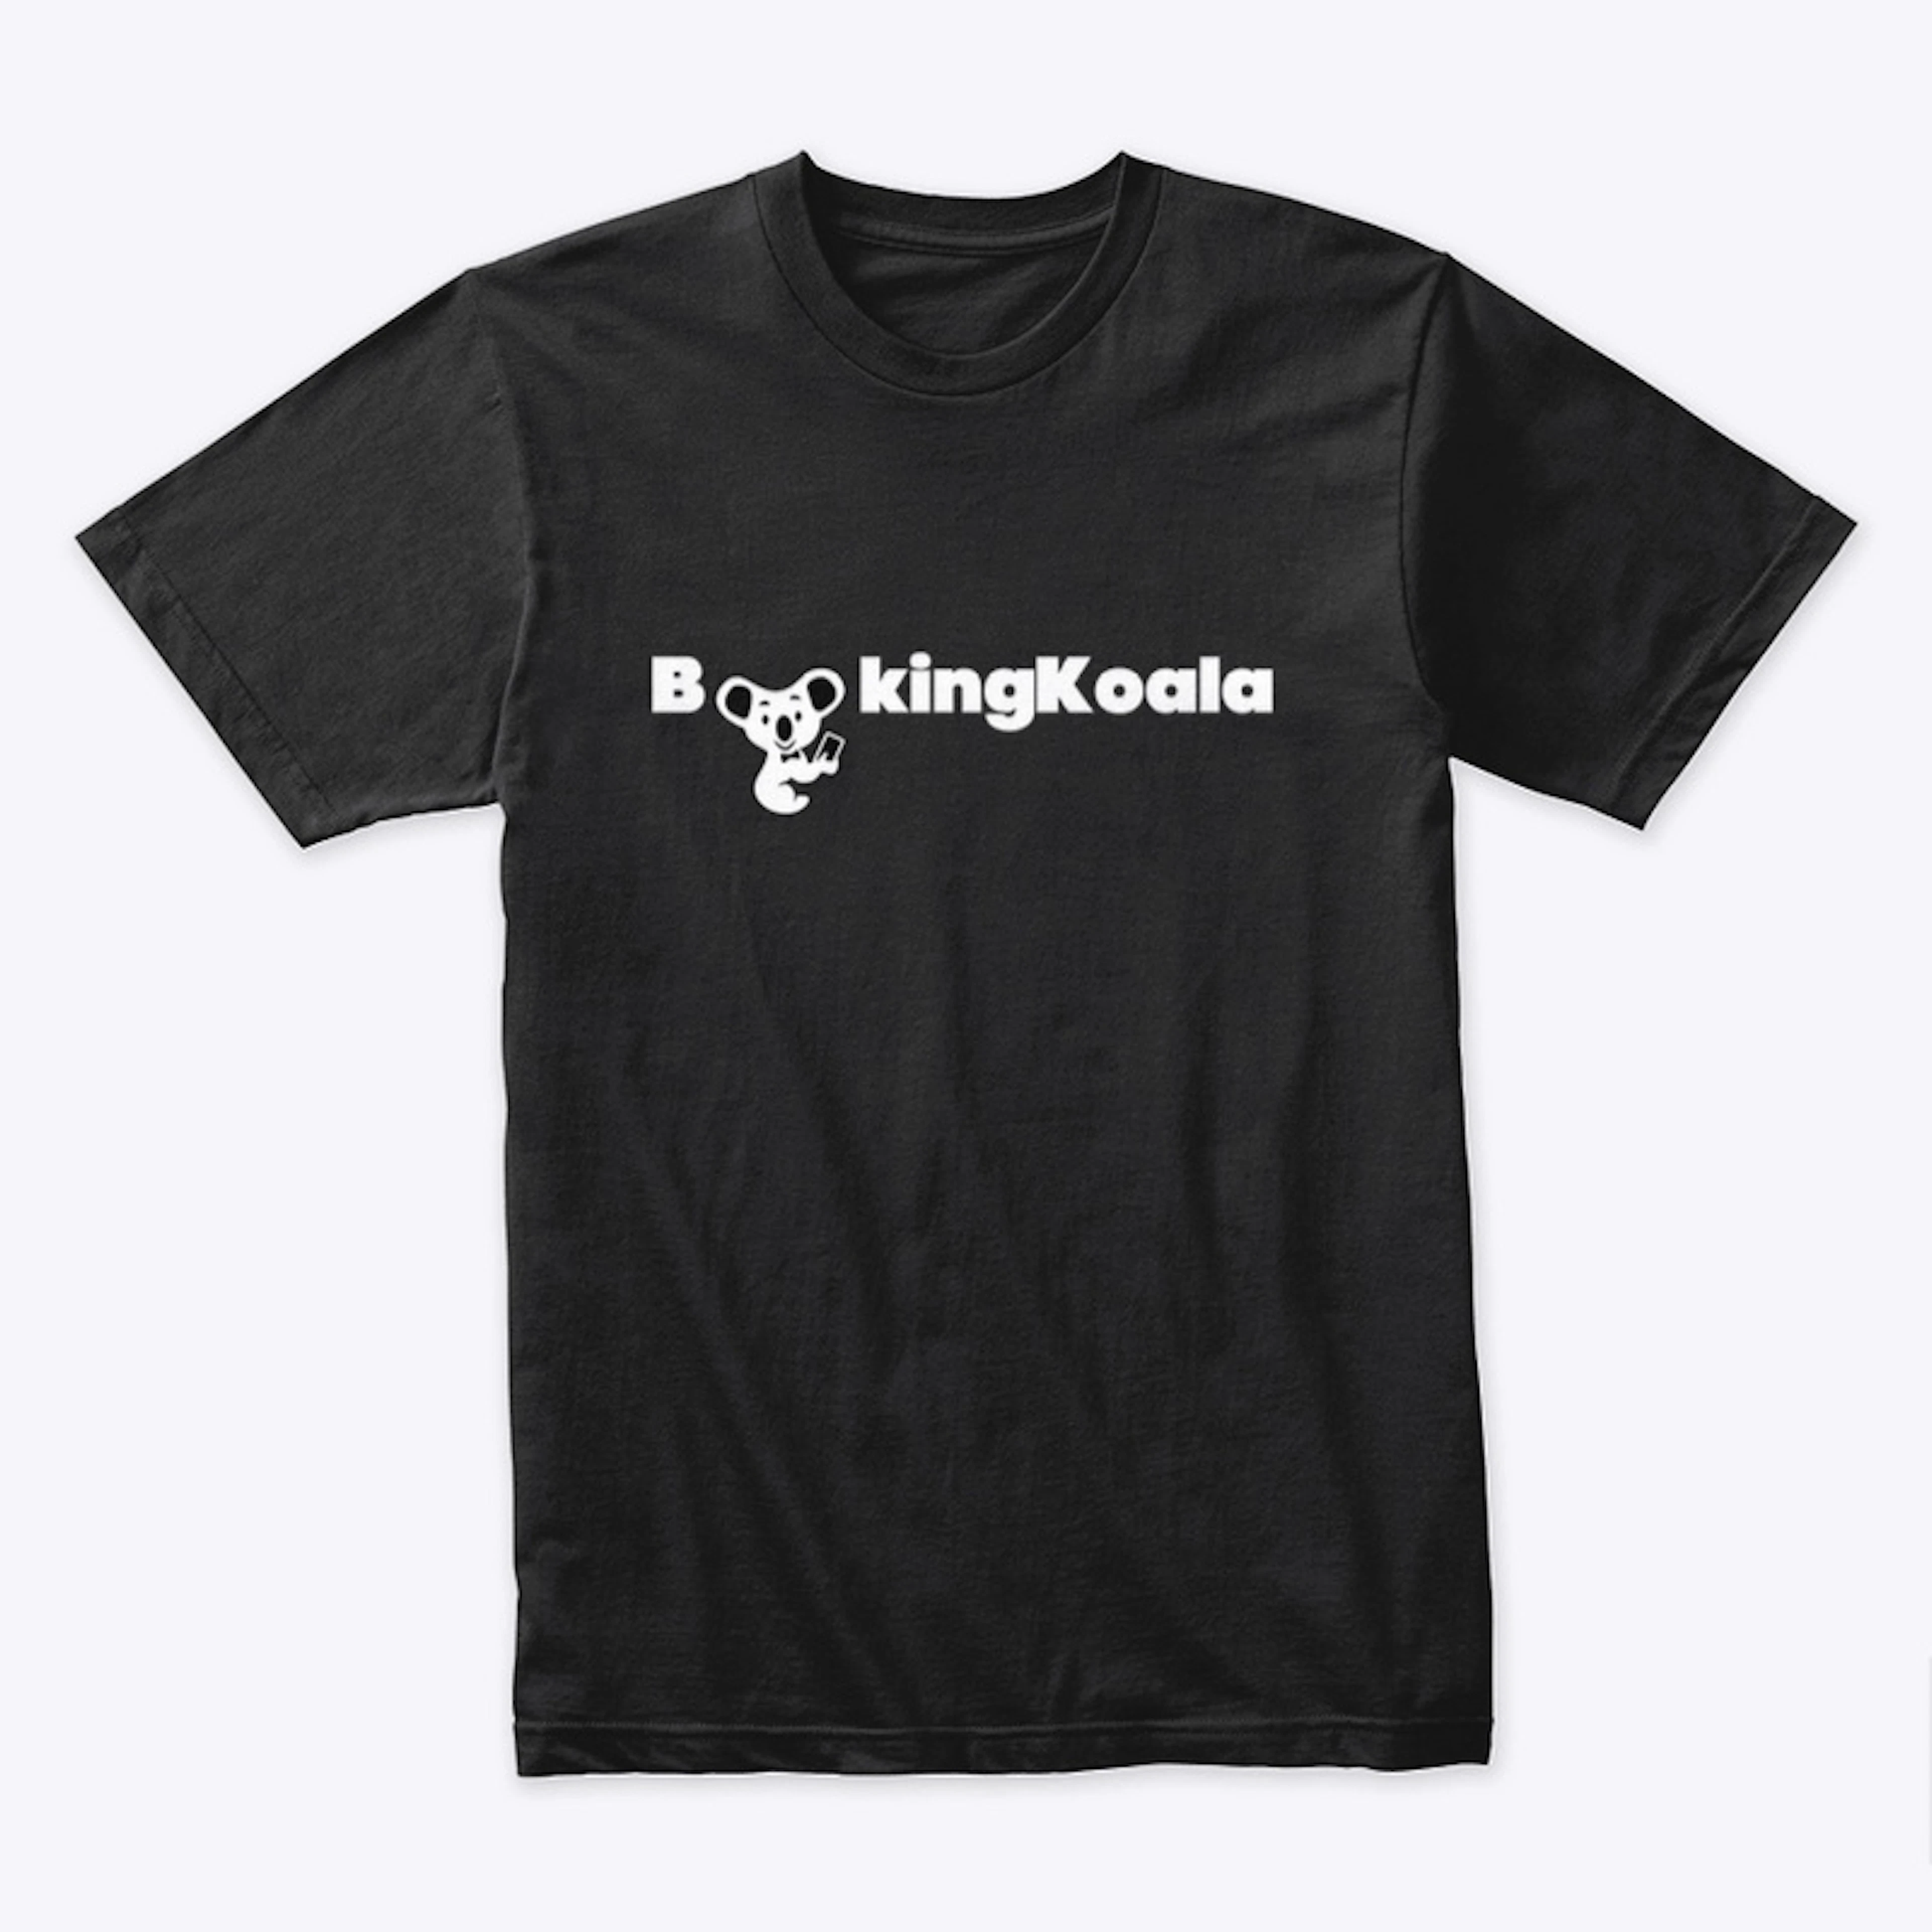 BookingKoala Black Collection